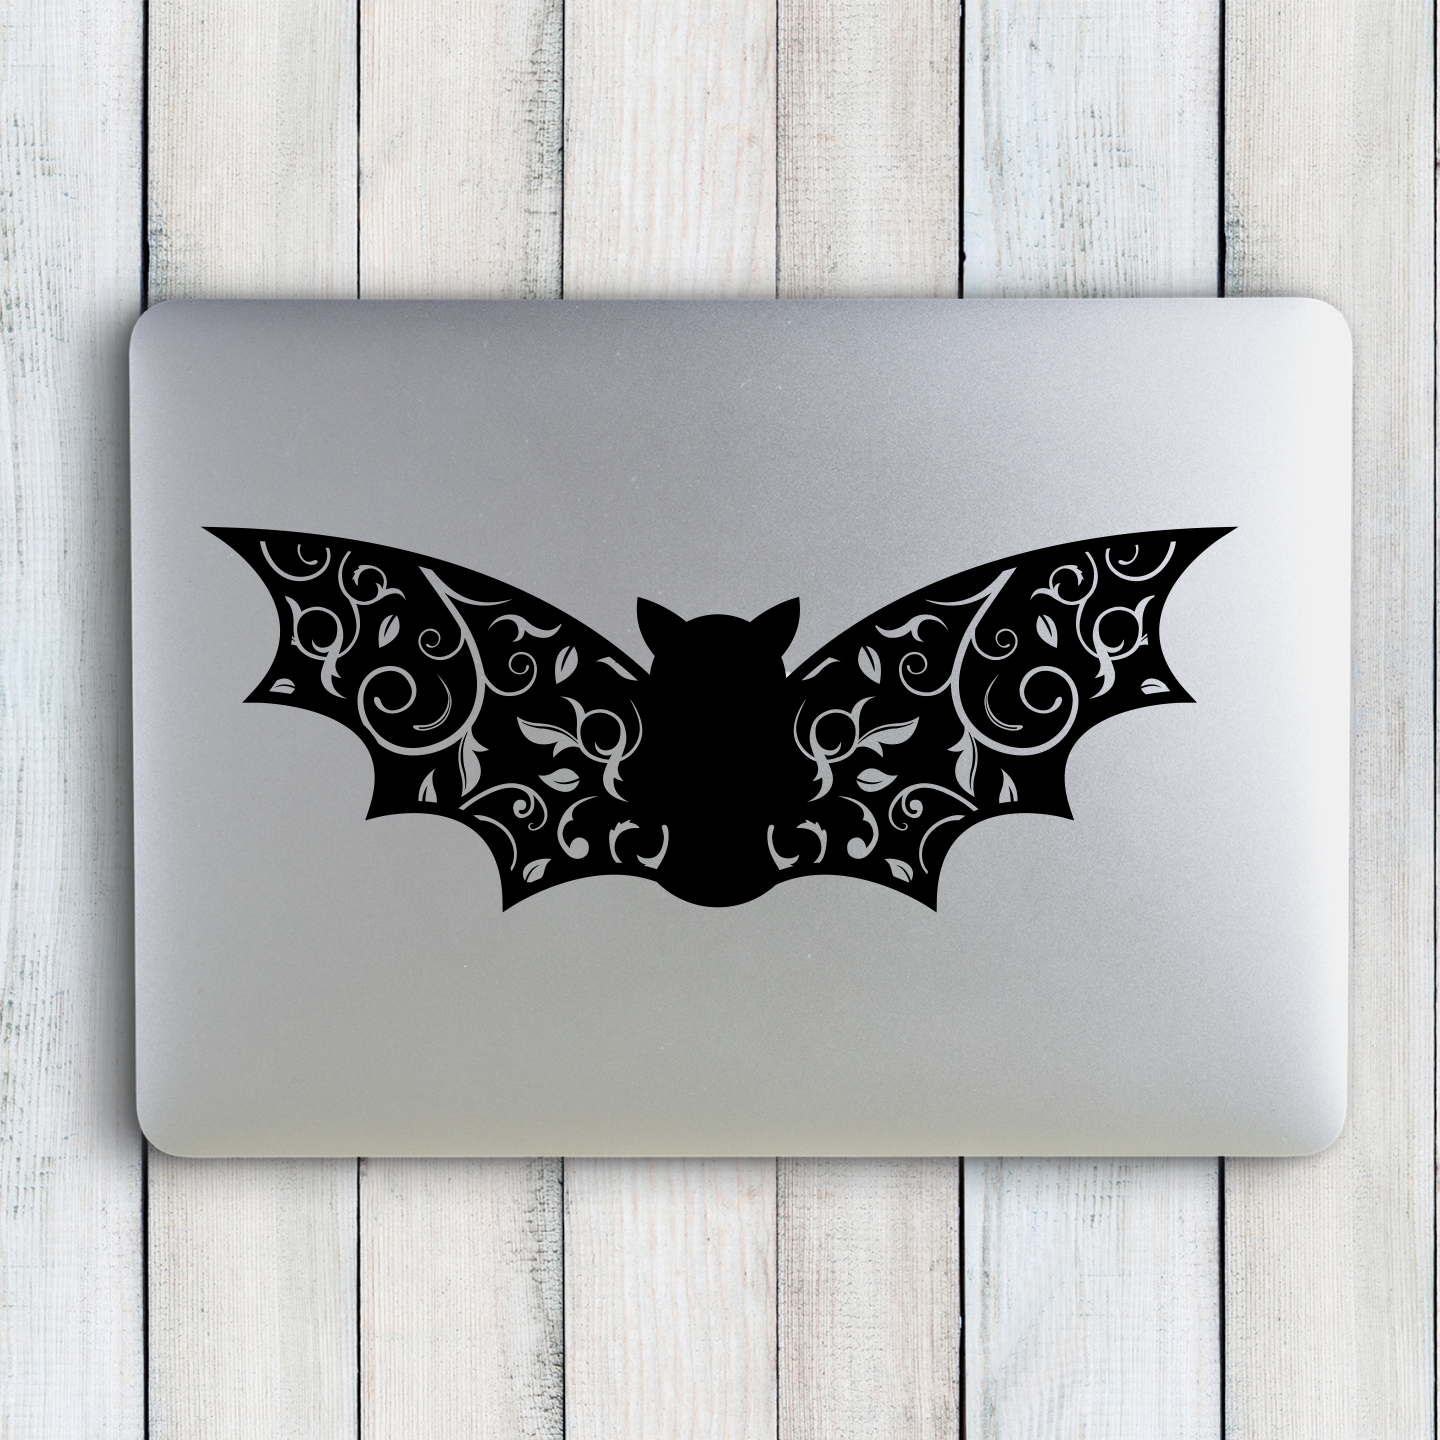 Decorative Bat Silhouette Sticker